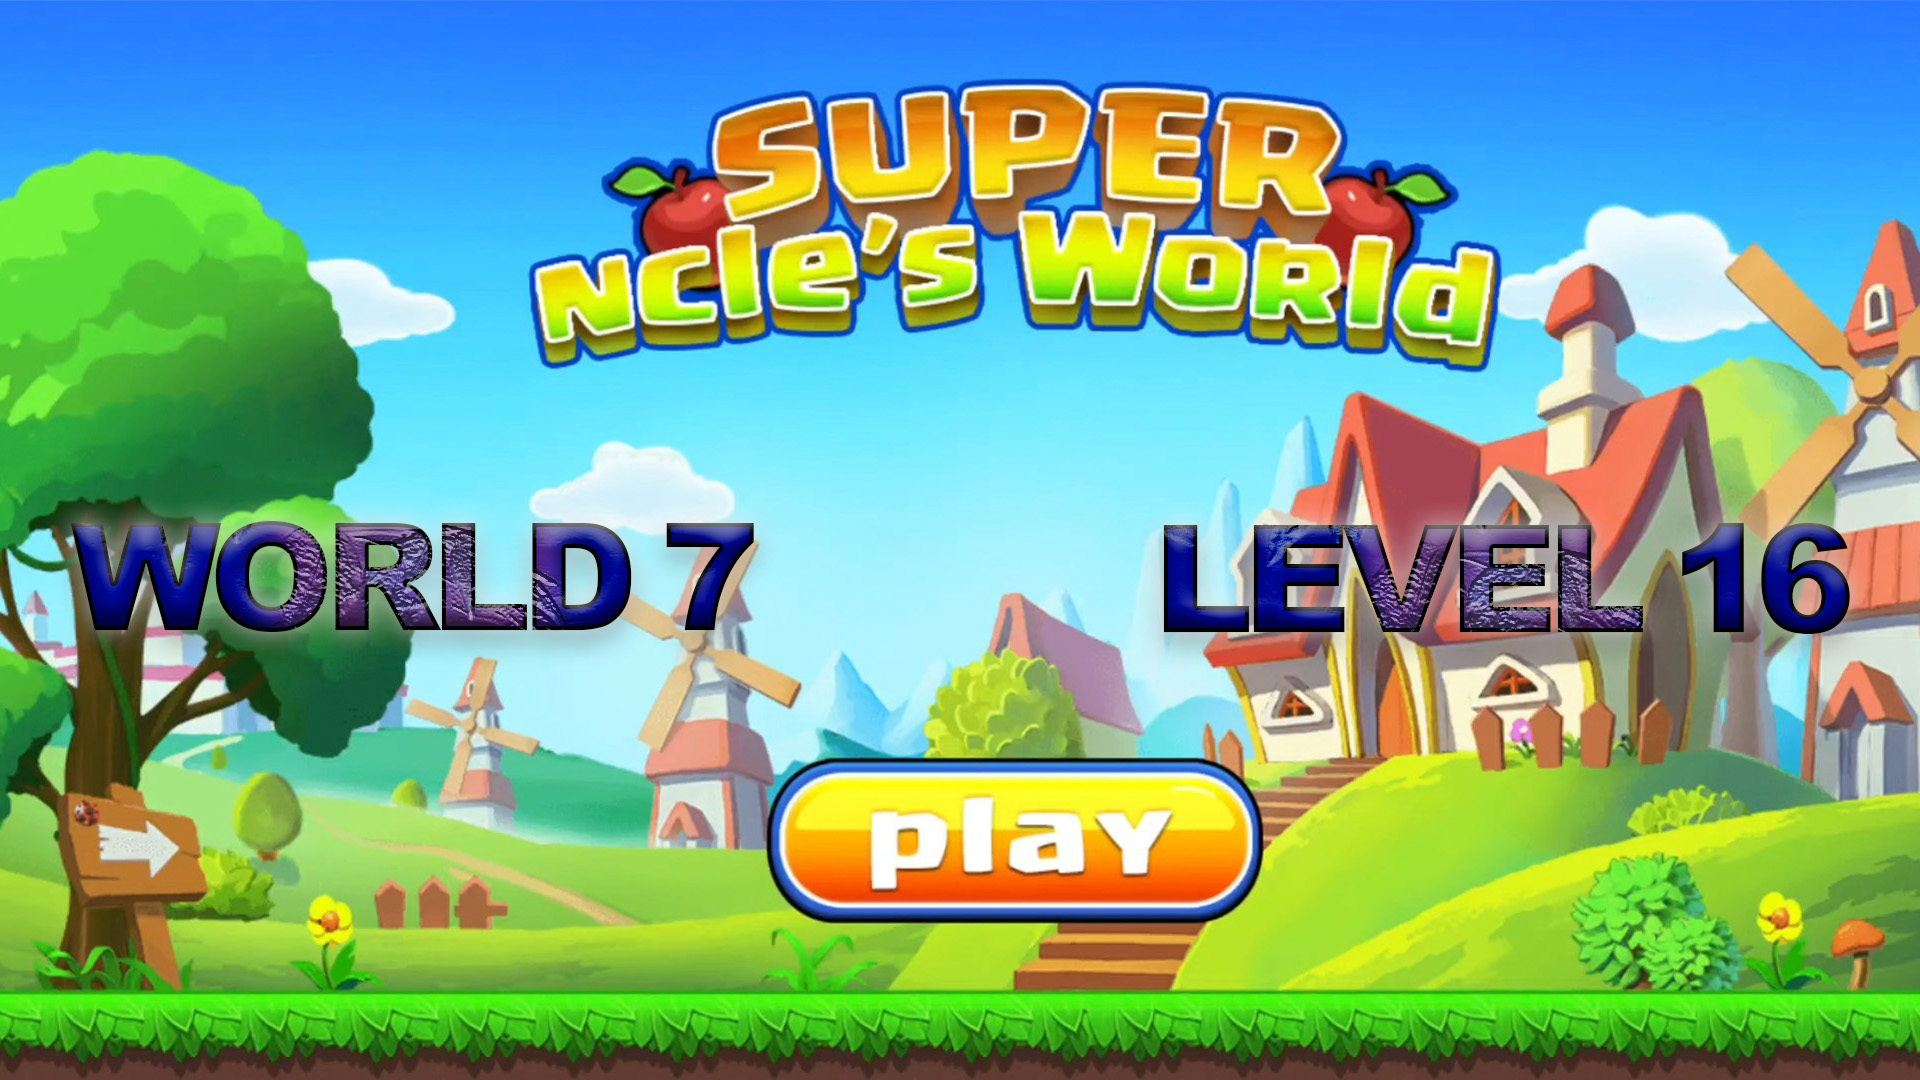 Super ncle's  World 7. Level 16.